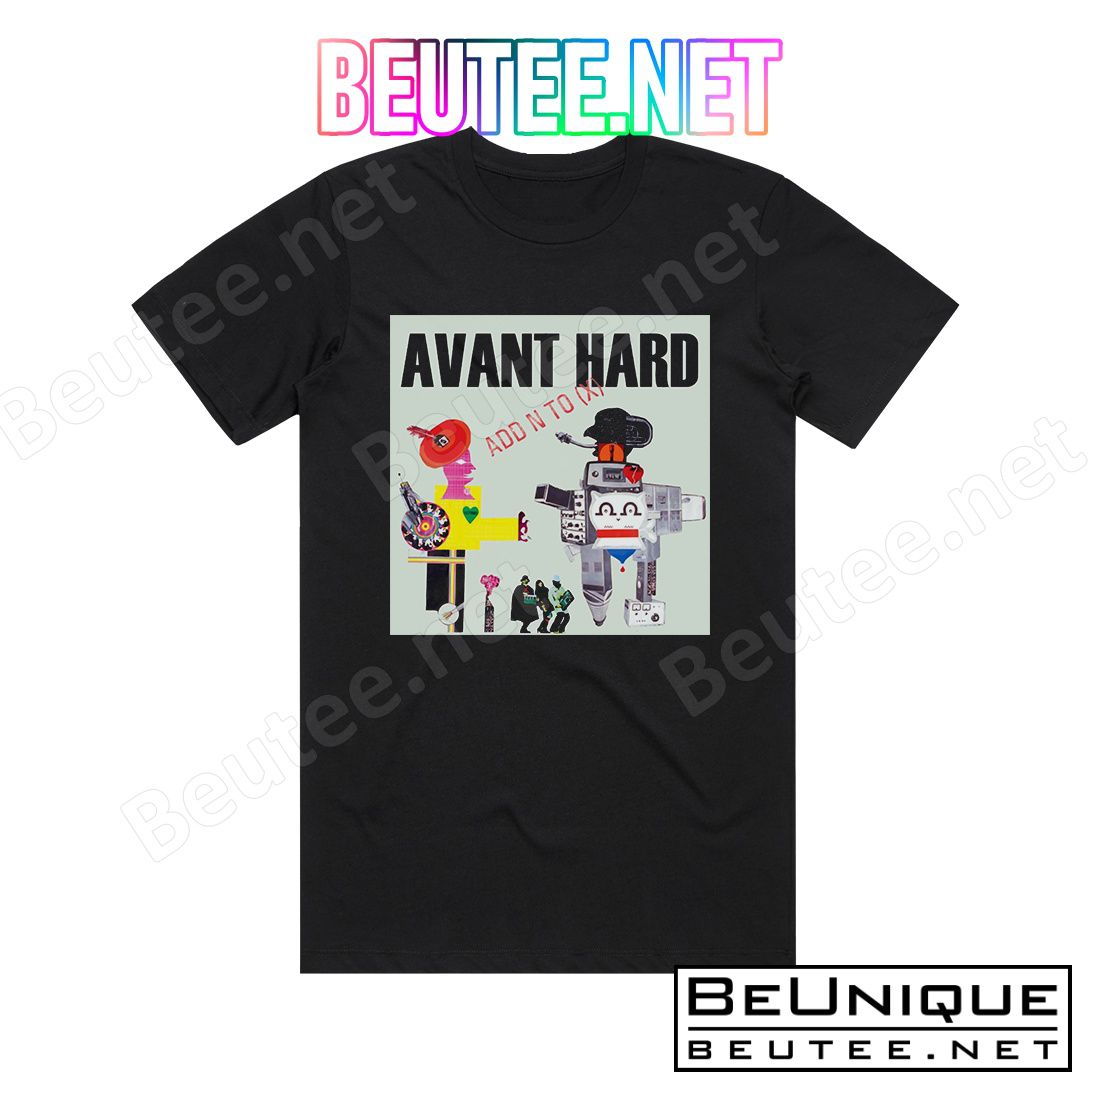 Add N to X Avant Hard Album Cover T-shirt